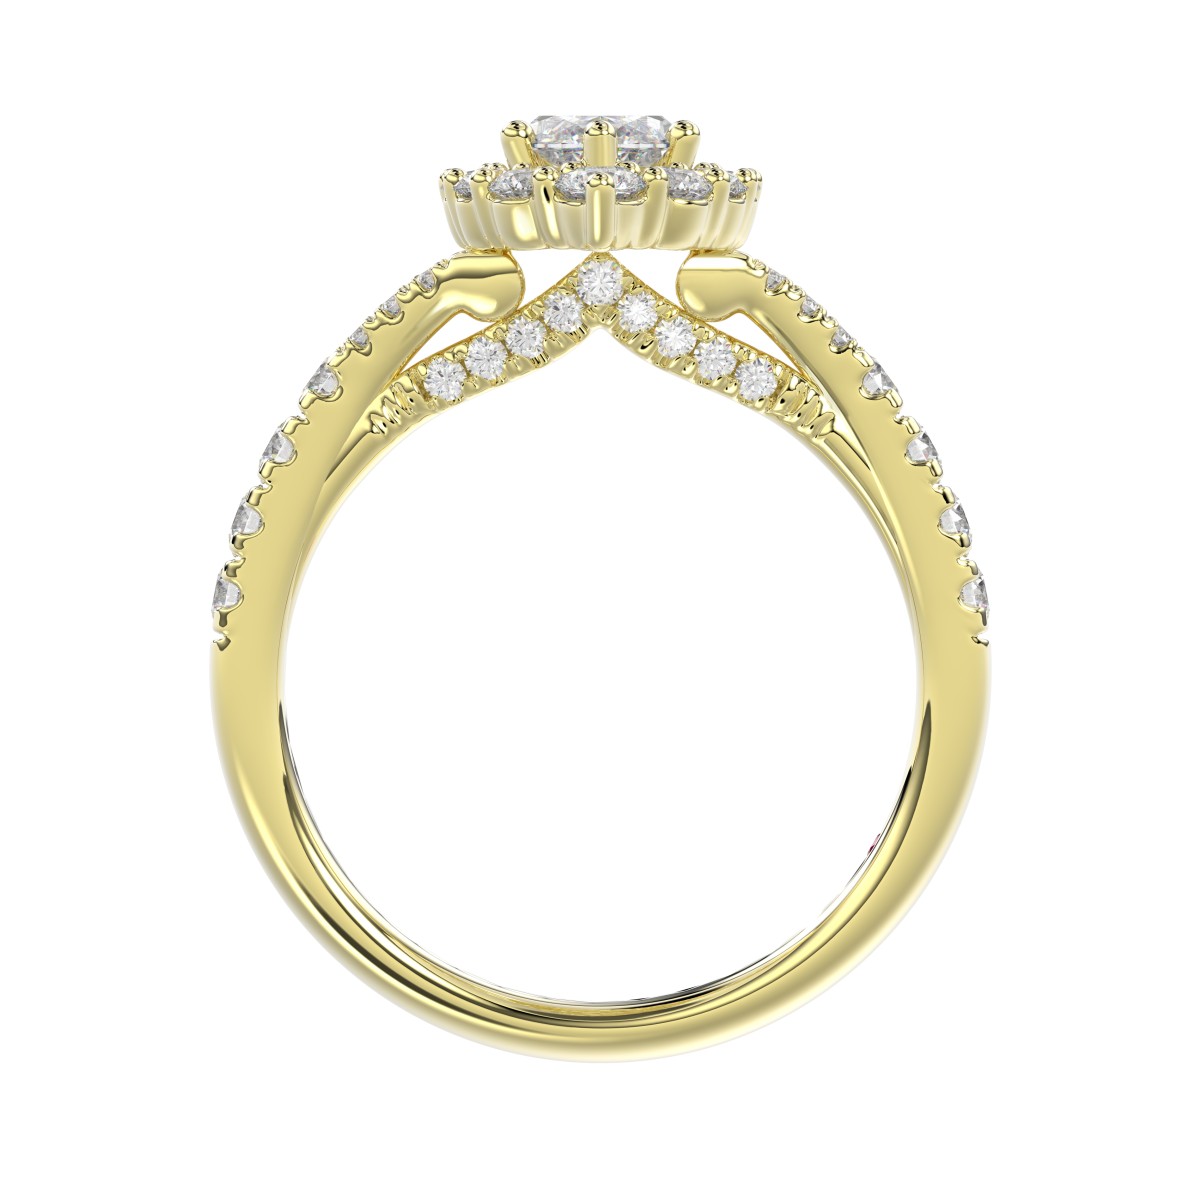 14K YELLOW GOLD 1 3/4CT ROUND/MARQUISE DIAMOND LADIES RING(CENTER STONE MARQUISE DIAMOND 1CT)